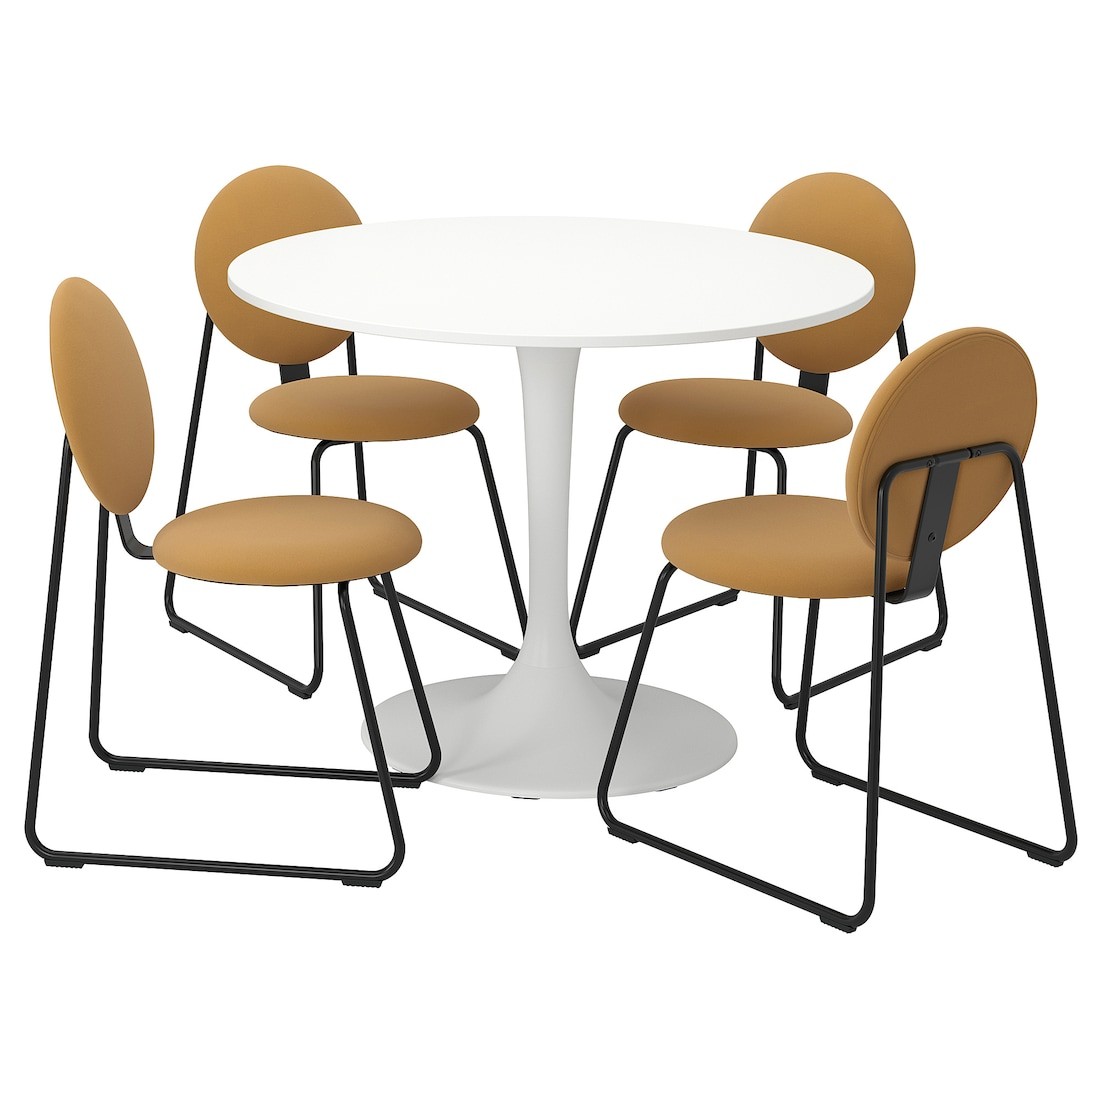 DOCKSTA / MÅNHULT Стол и 4 стула, белый белый / Hakebo медово-коричневый, 103 см